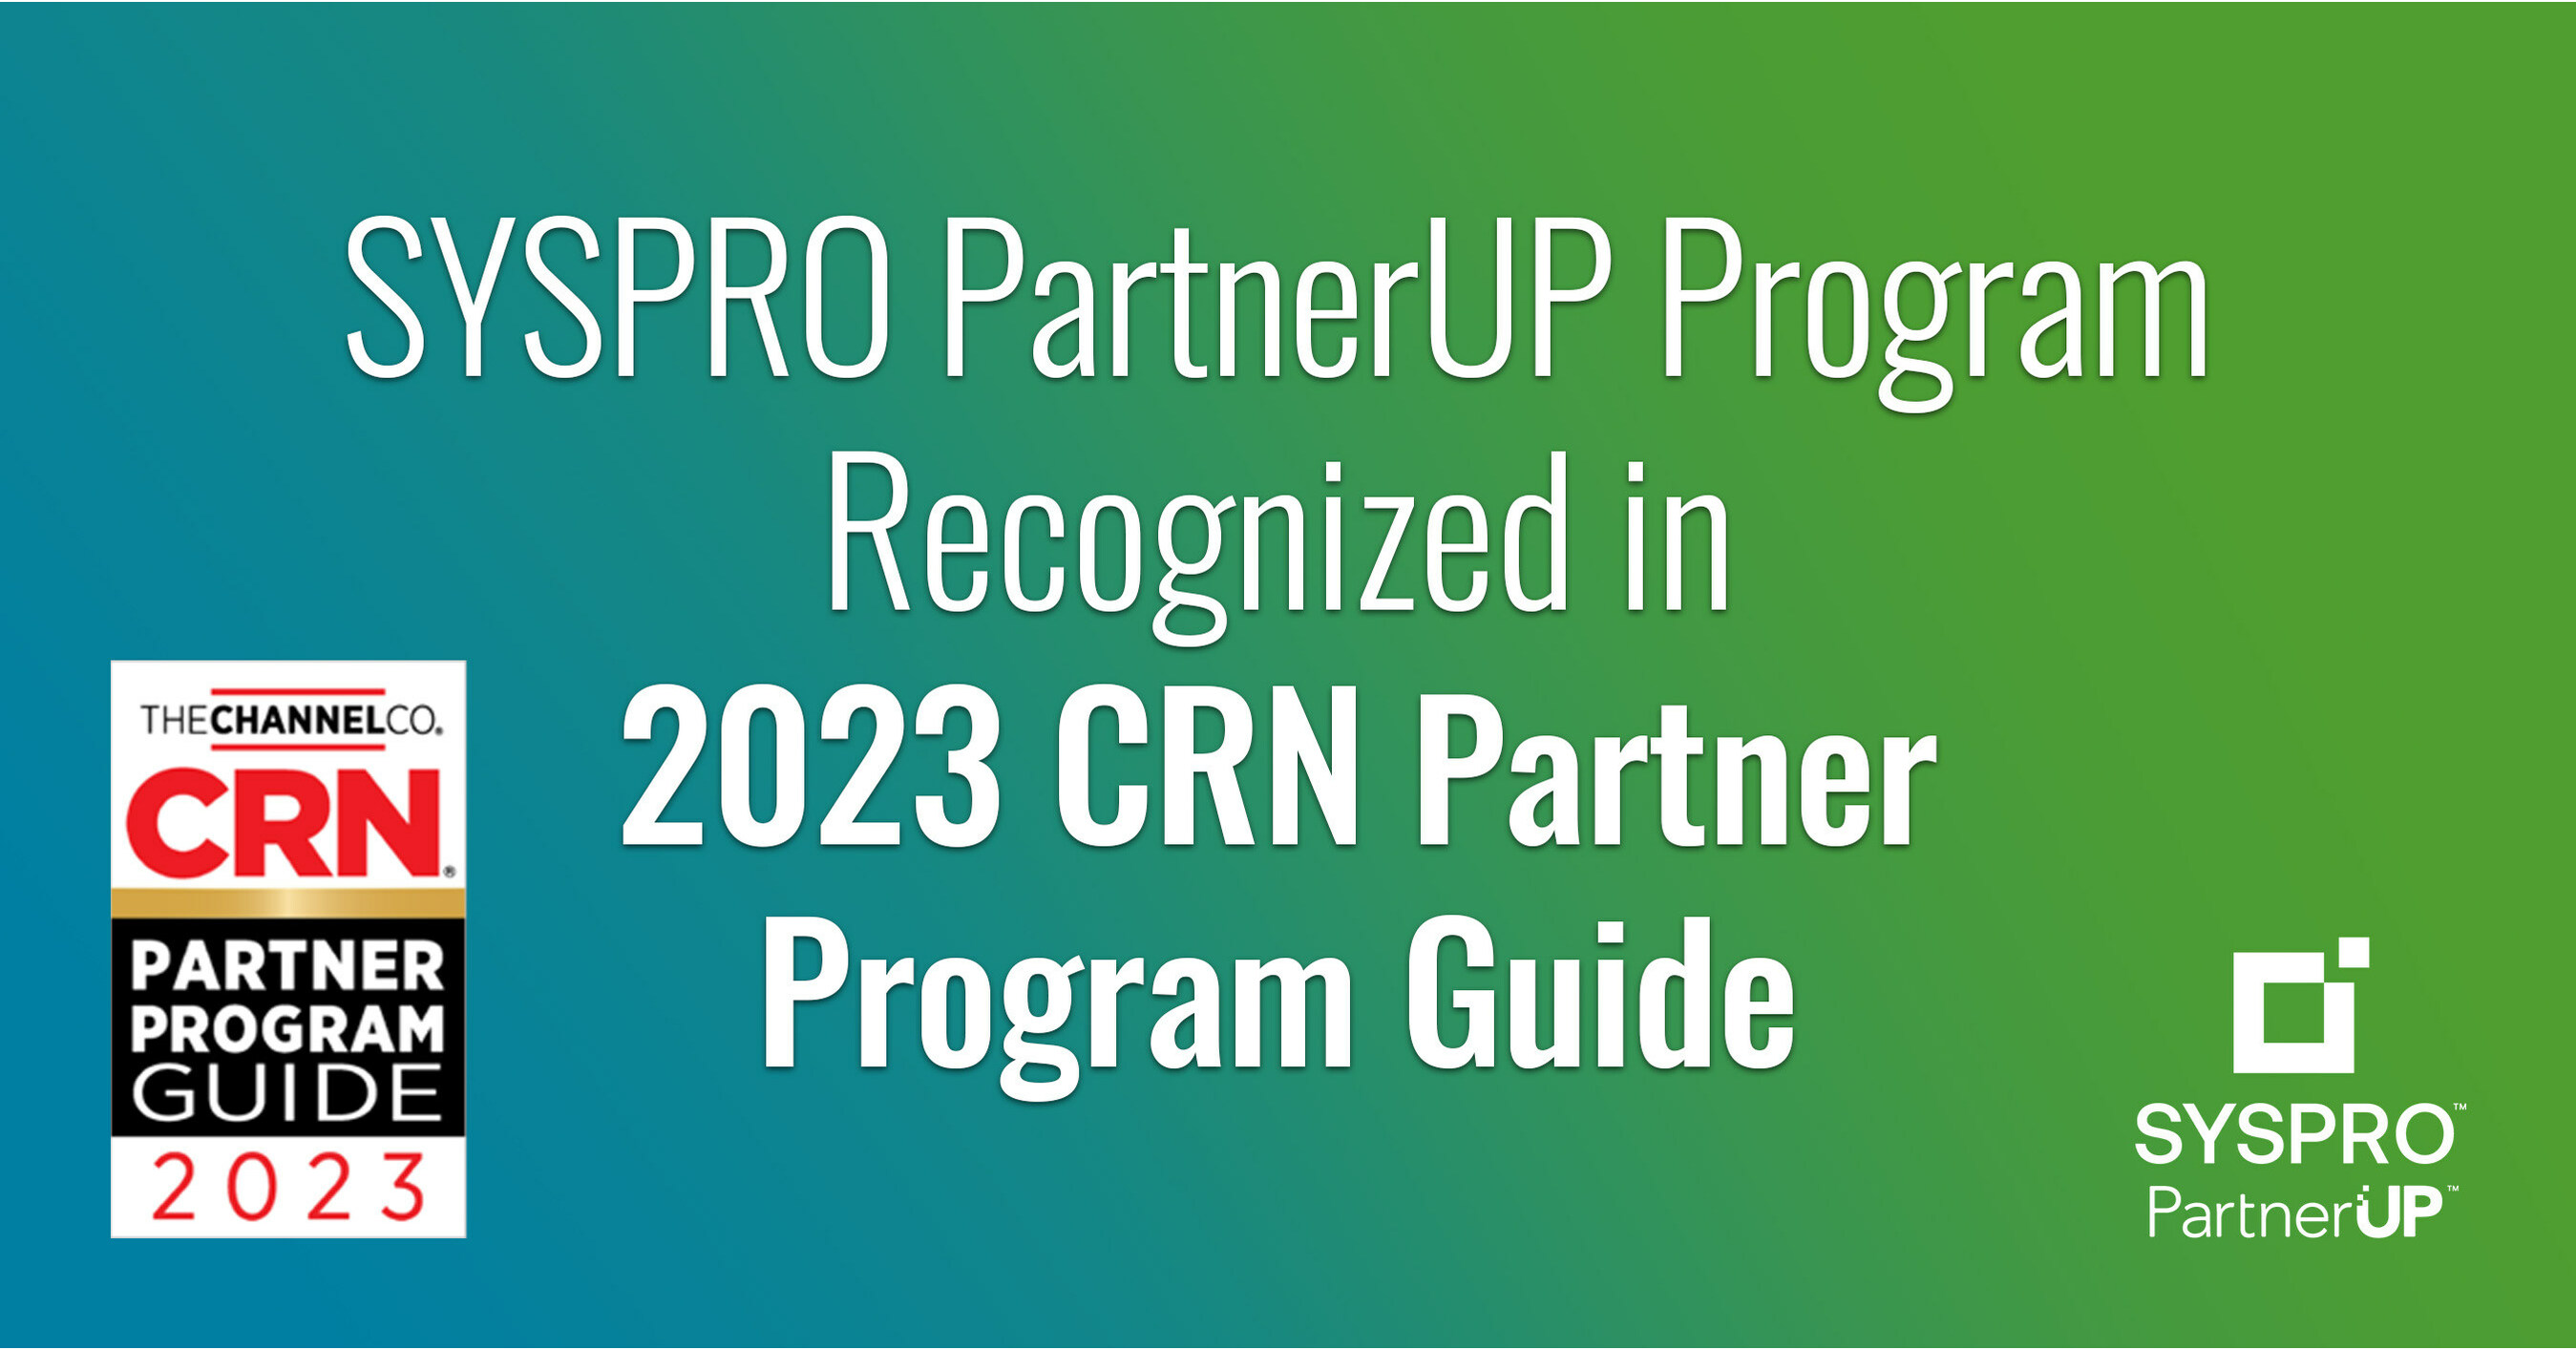 SYSPRO PartnerUP Program Recognized in 2023 CRN Partner Program Guide